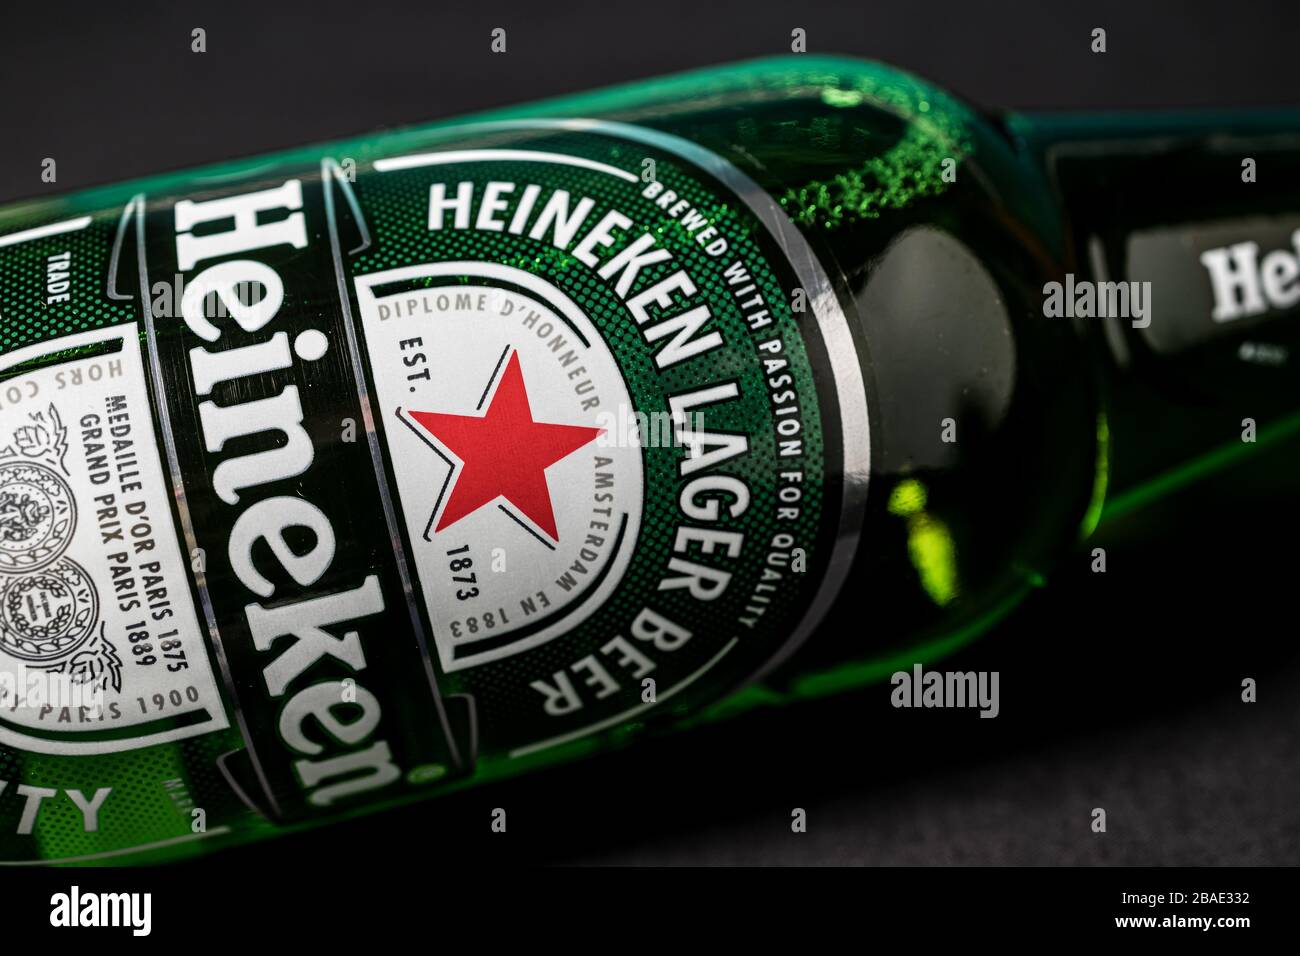 LONDON - MARCH 11, 2020: Heineken lager beer bottle on dark background Stock Photo